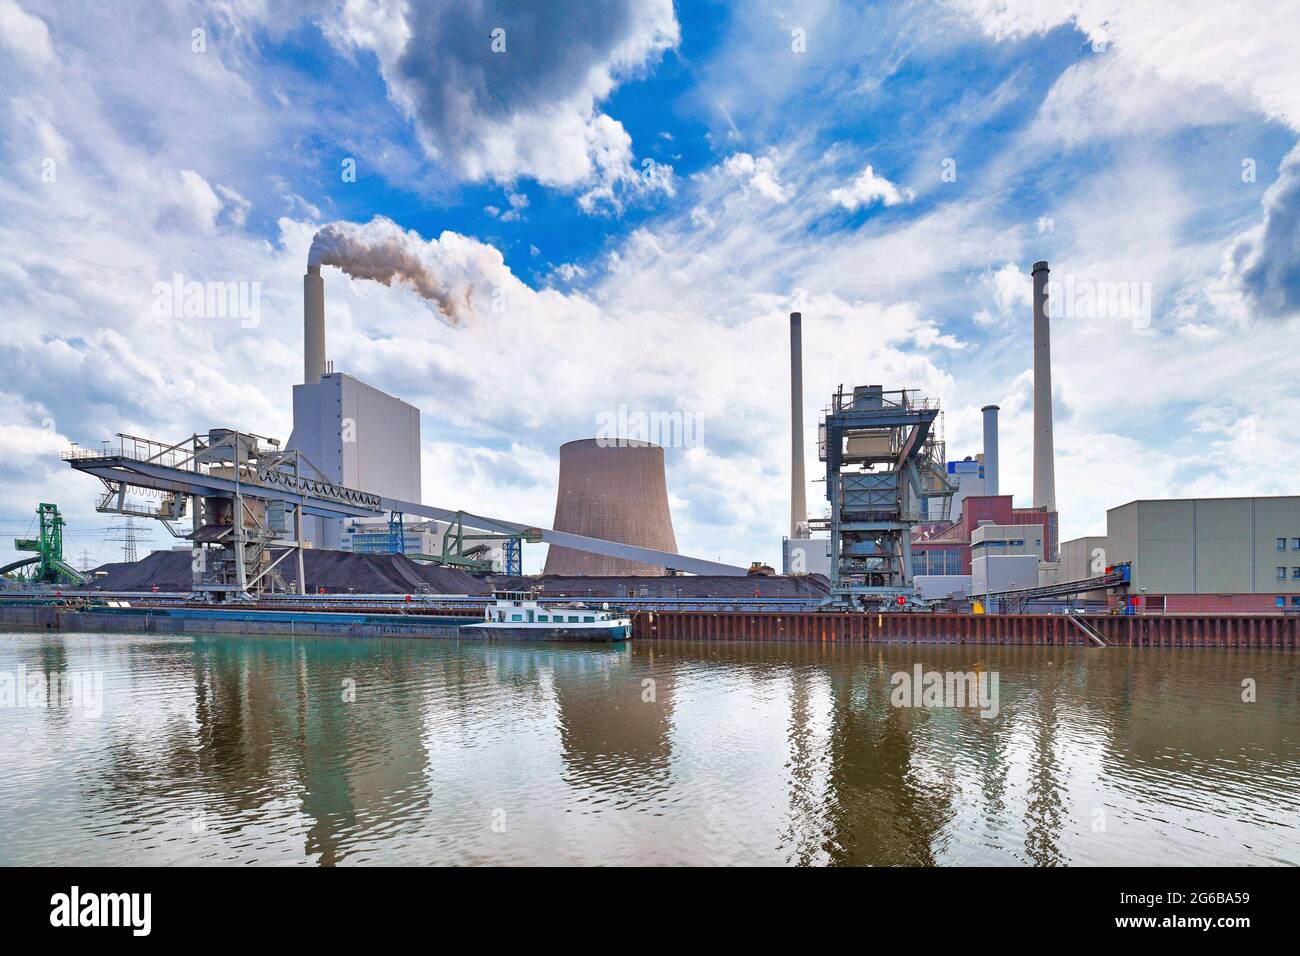 La centrale a vapore Rheinhafen di Karlsruhe, in Germania, utilizzava generazione di elettricità e teleriscaldamento da carbone duro Foto Stock